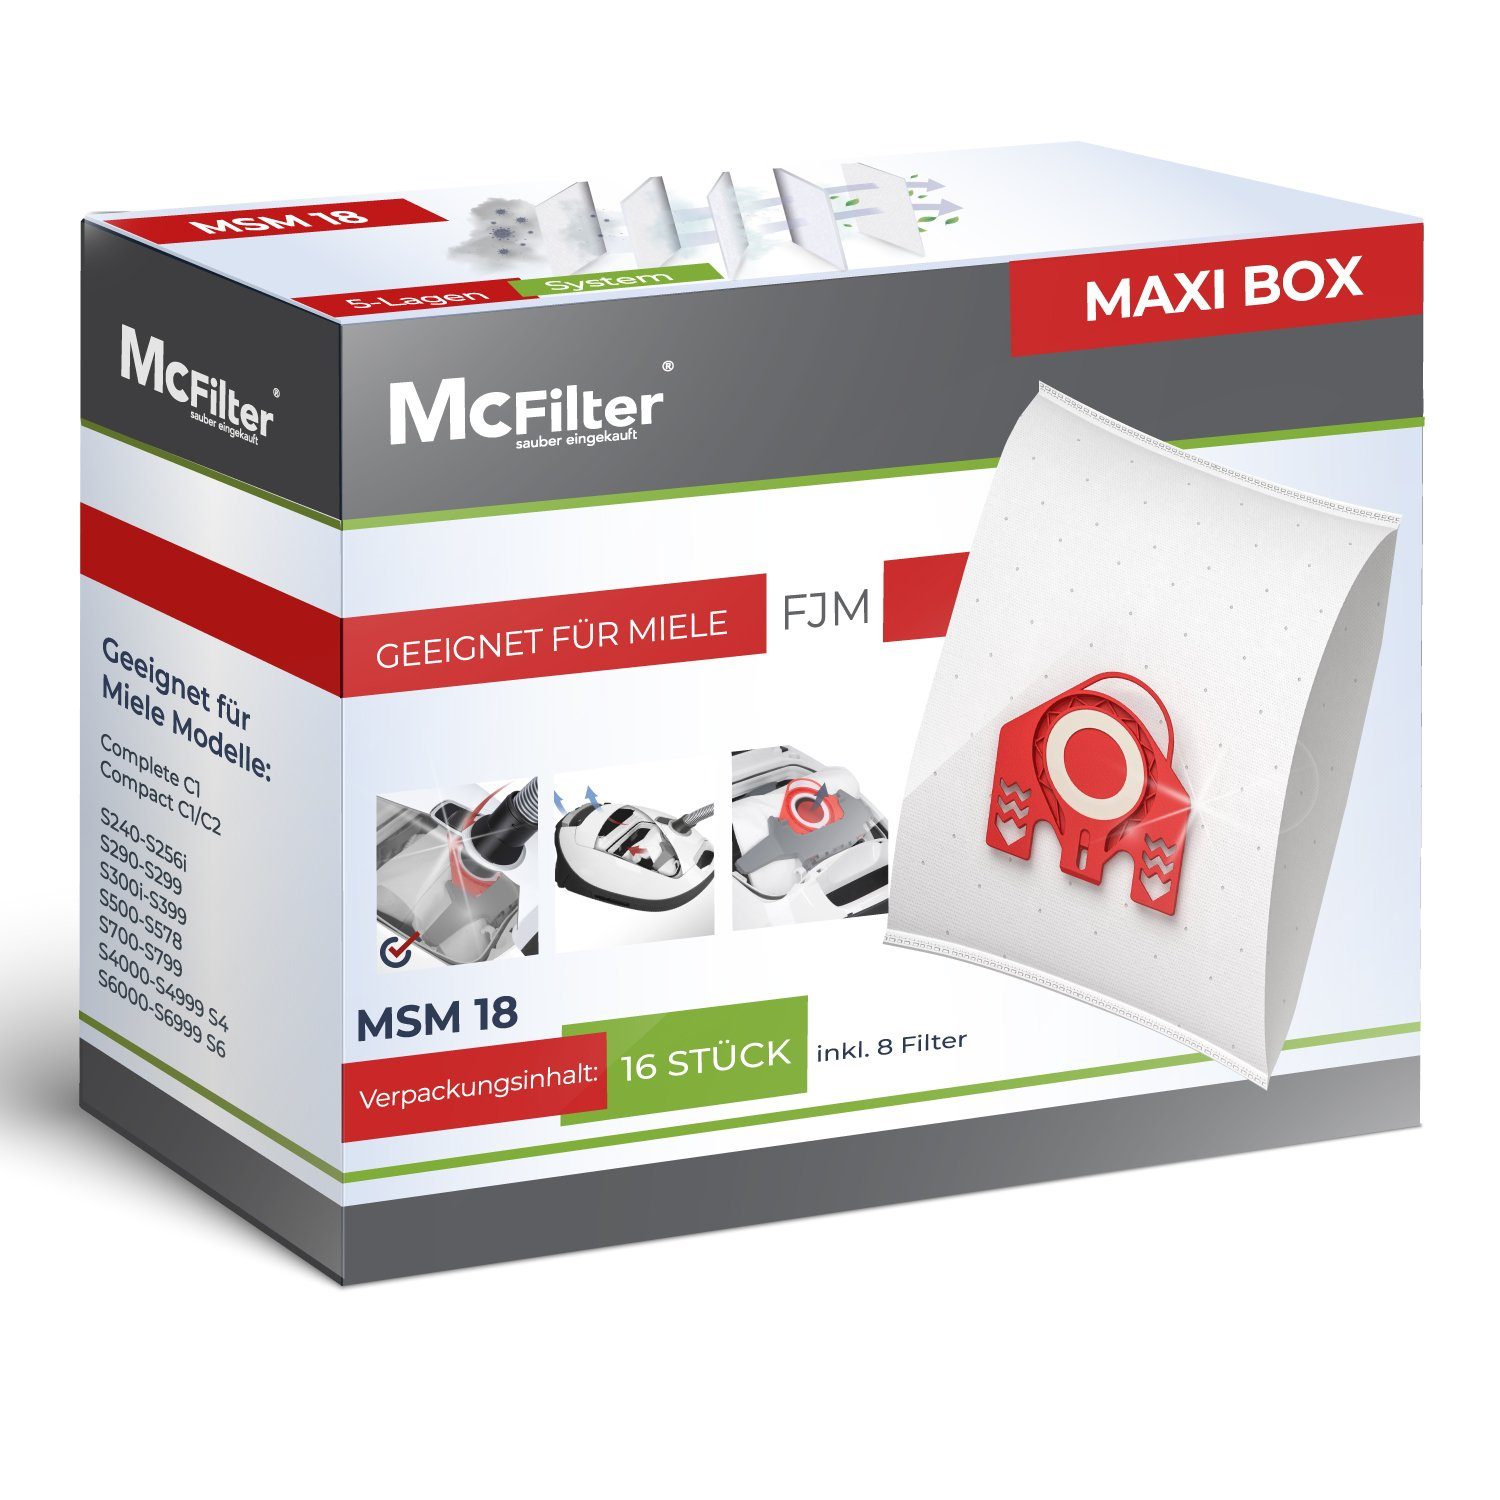 McFilter Staubsaugerbeutel Miele MAXI BOX 16+8, passend für FJM Serie, S2  S3 S4 S5 S6 S7, Complete C1, Compact C1/C2, inkl. 8 Filter, 16 St., Top  Miele Alternative zu Original 9917710, wie 10408420